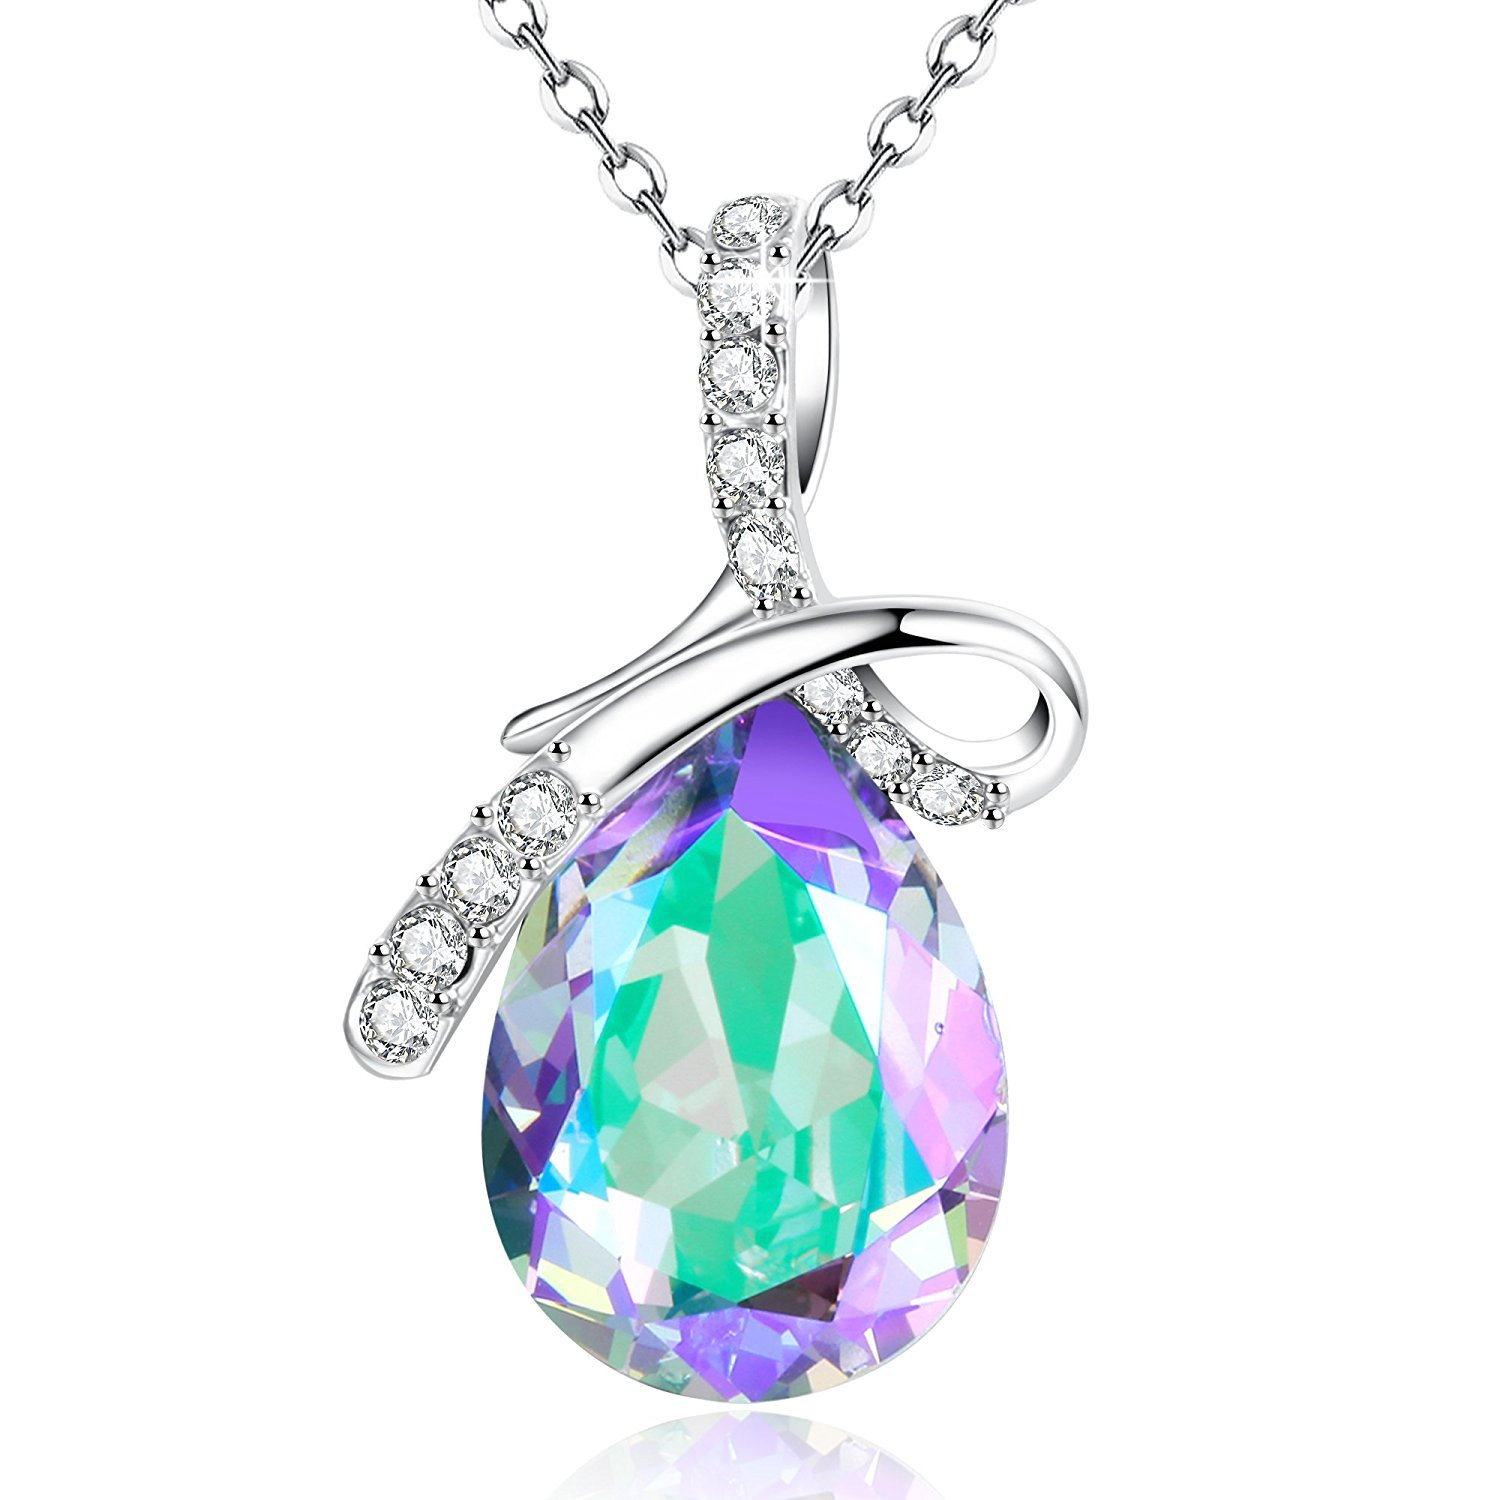 Purple Pendant Necklace
 " Crystal Lake" Purple Pendant Necklace Teardrop Shaped